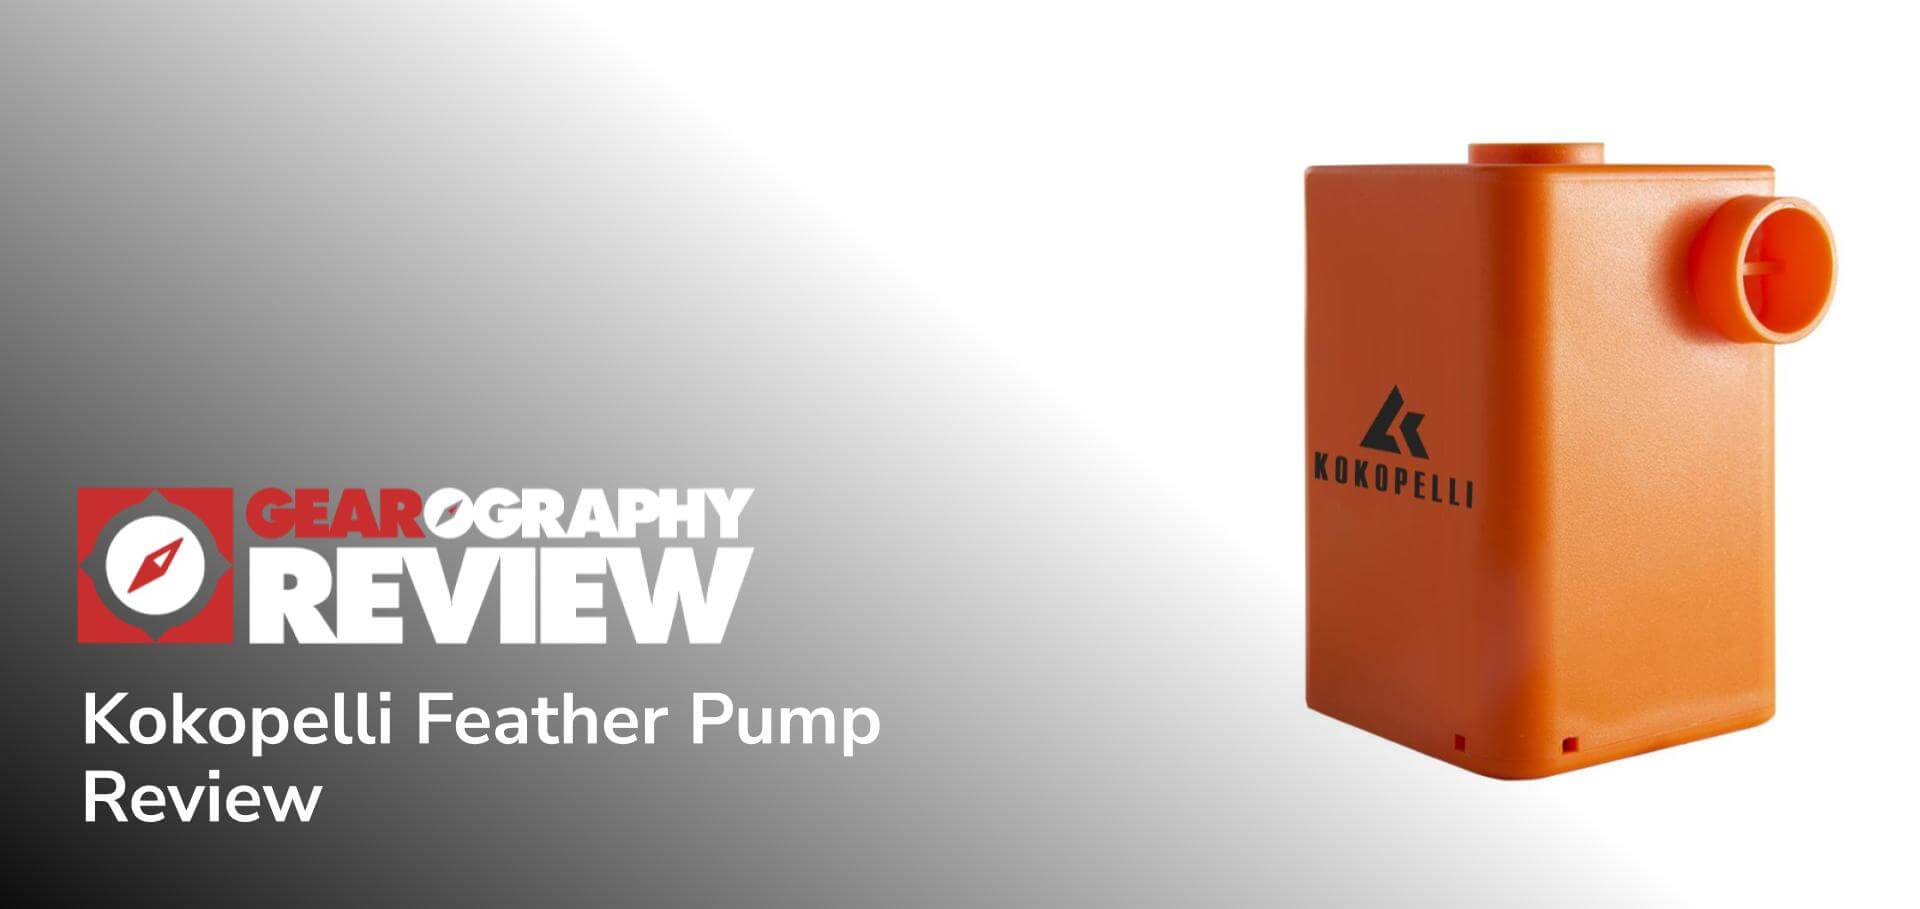 REVIEW: Kokopelli Feather Pump - GEAROGRAPHY